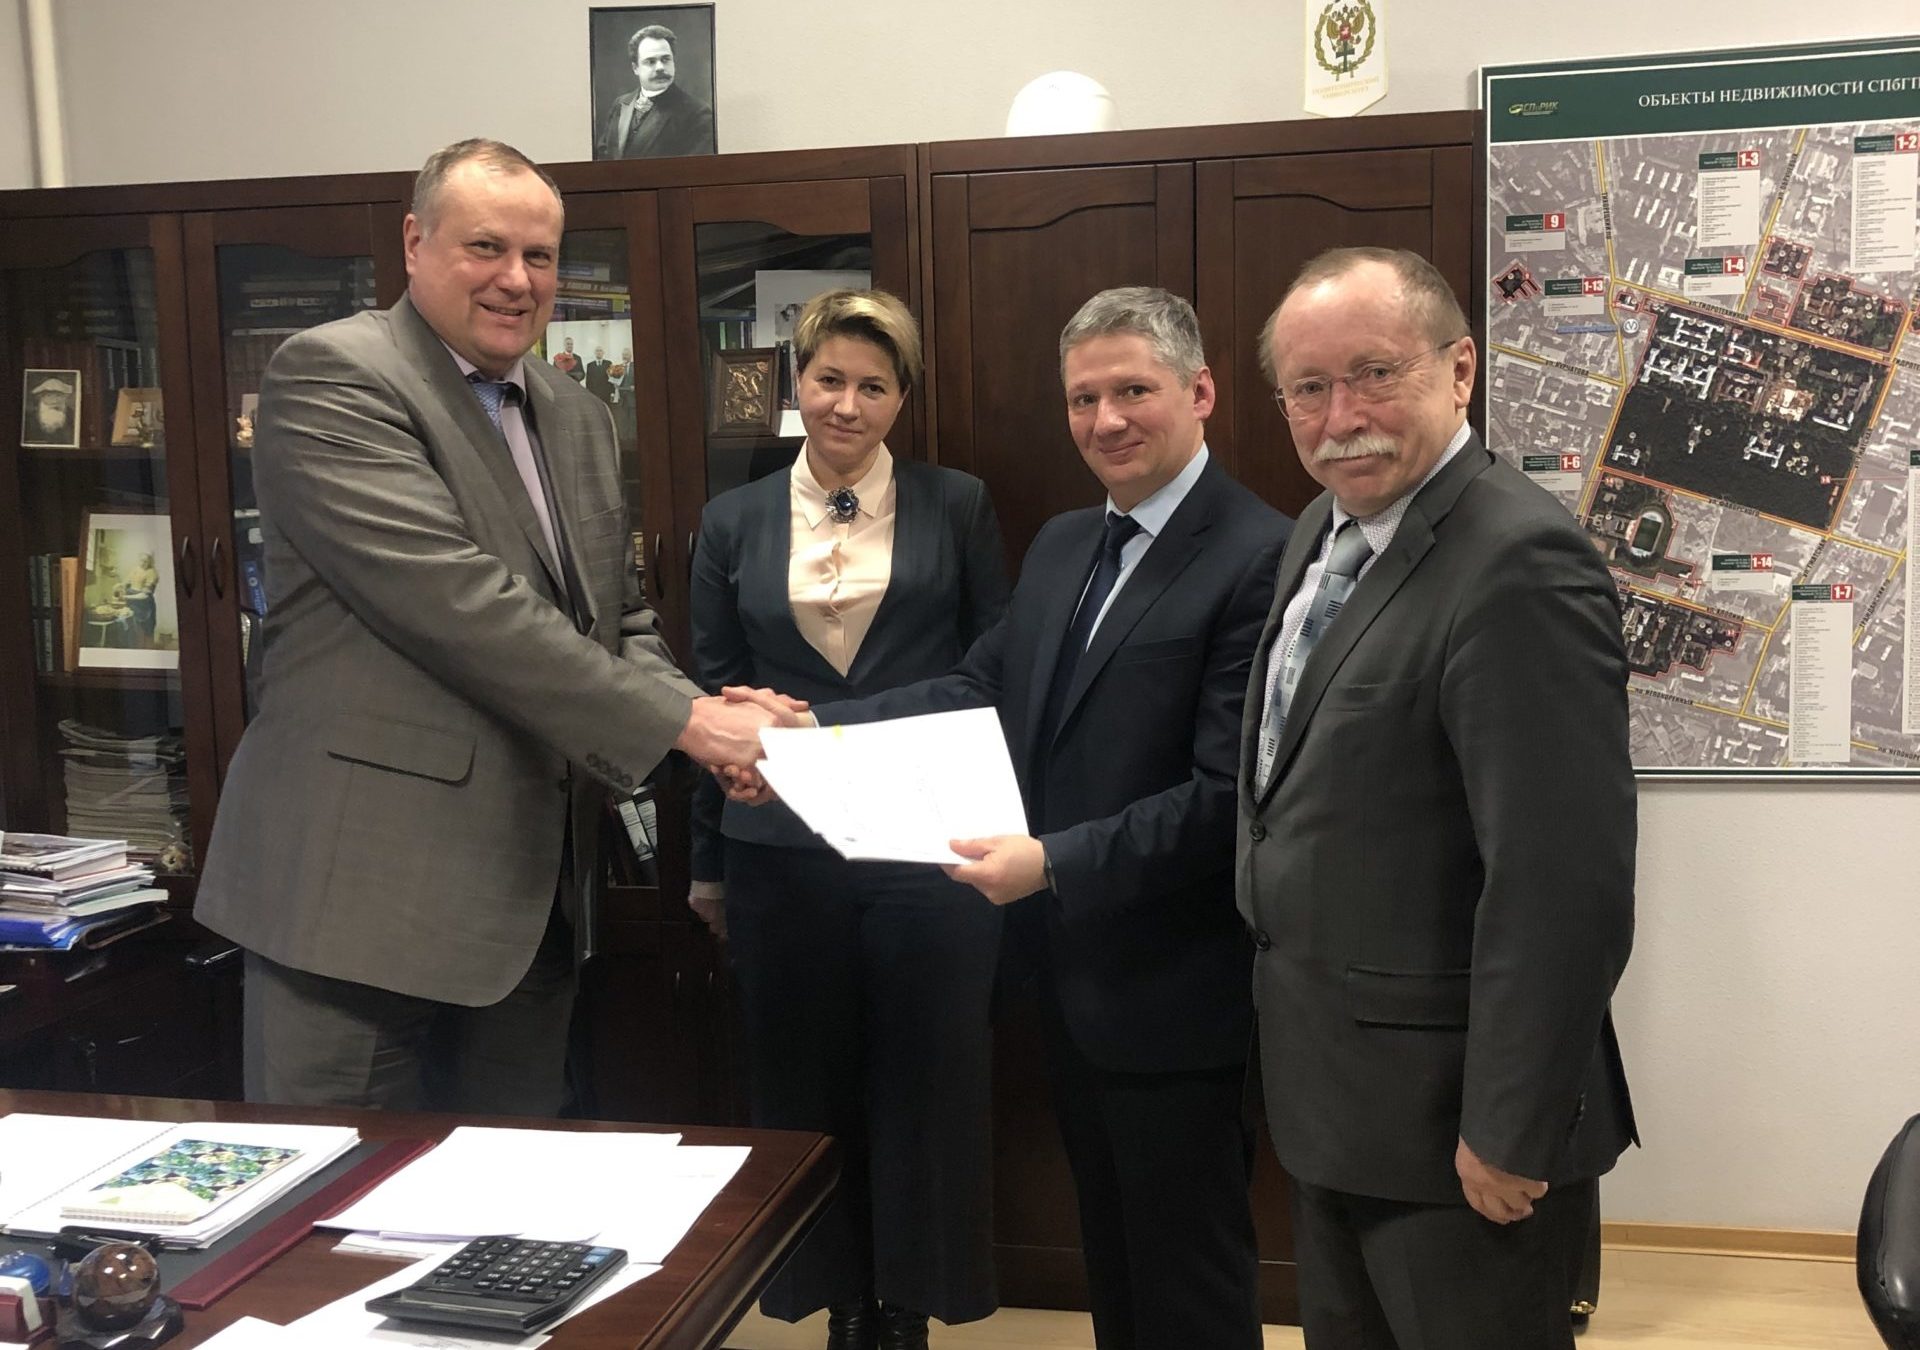 SPbPU and Lensvet signing cooperation agreement